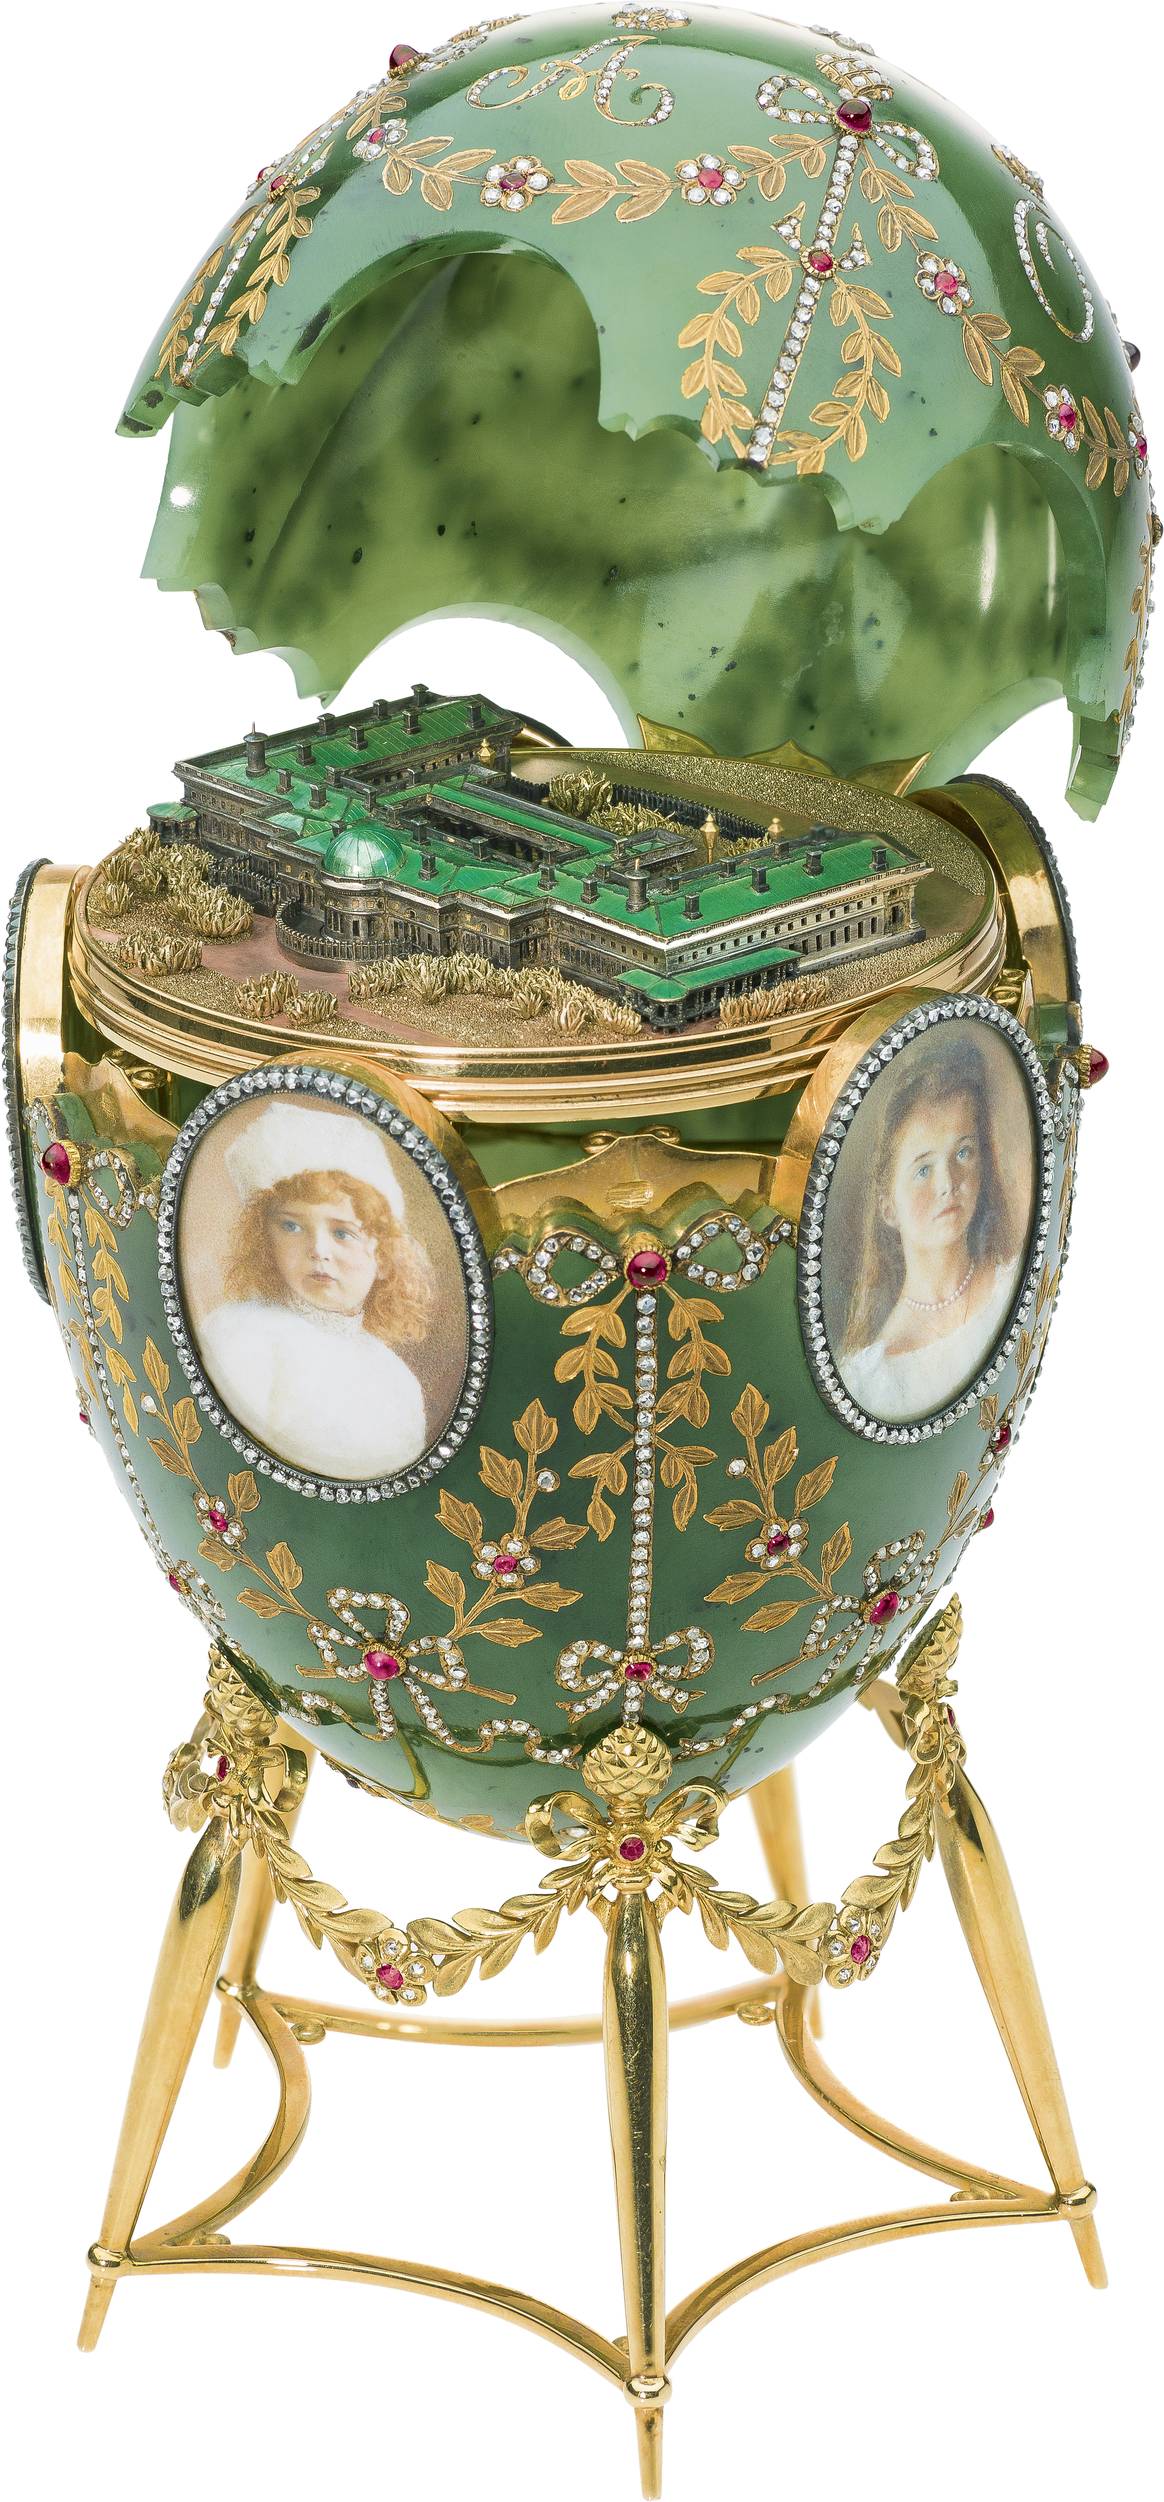 Bild: mit freundlicher Genehmigung des V&A; The Alexander Palace Egg, Fabergé. Chief Workmaster Henrik Wigström (1862-1923) - The Moscow Kremlin Museums.